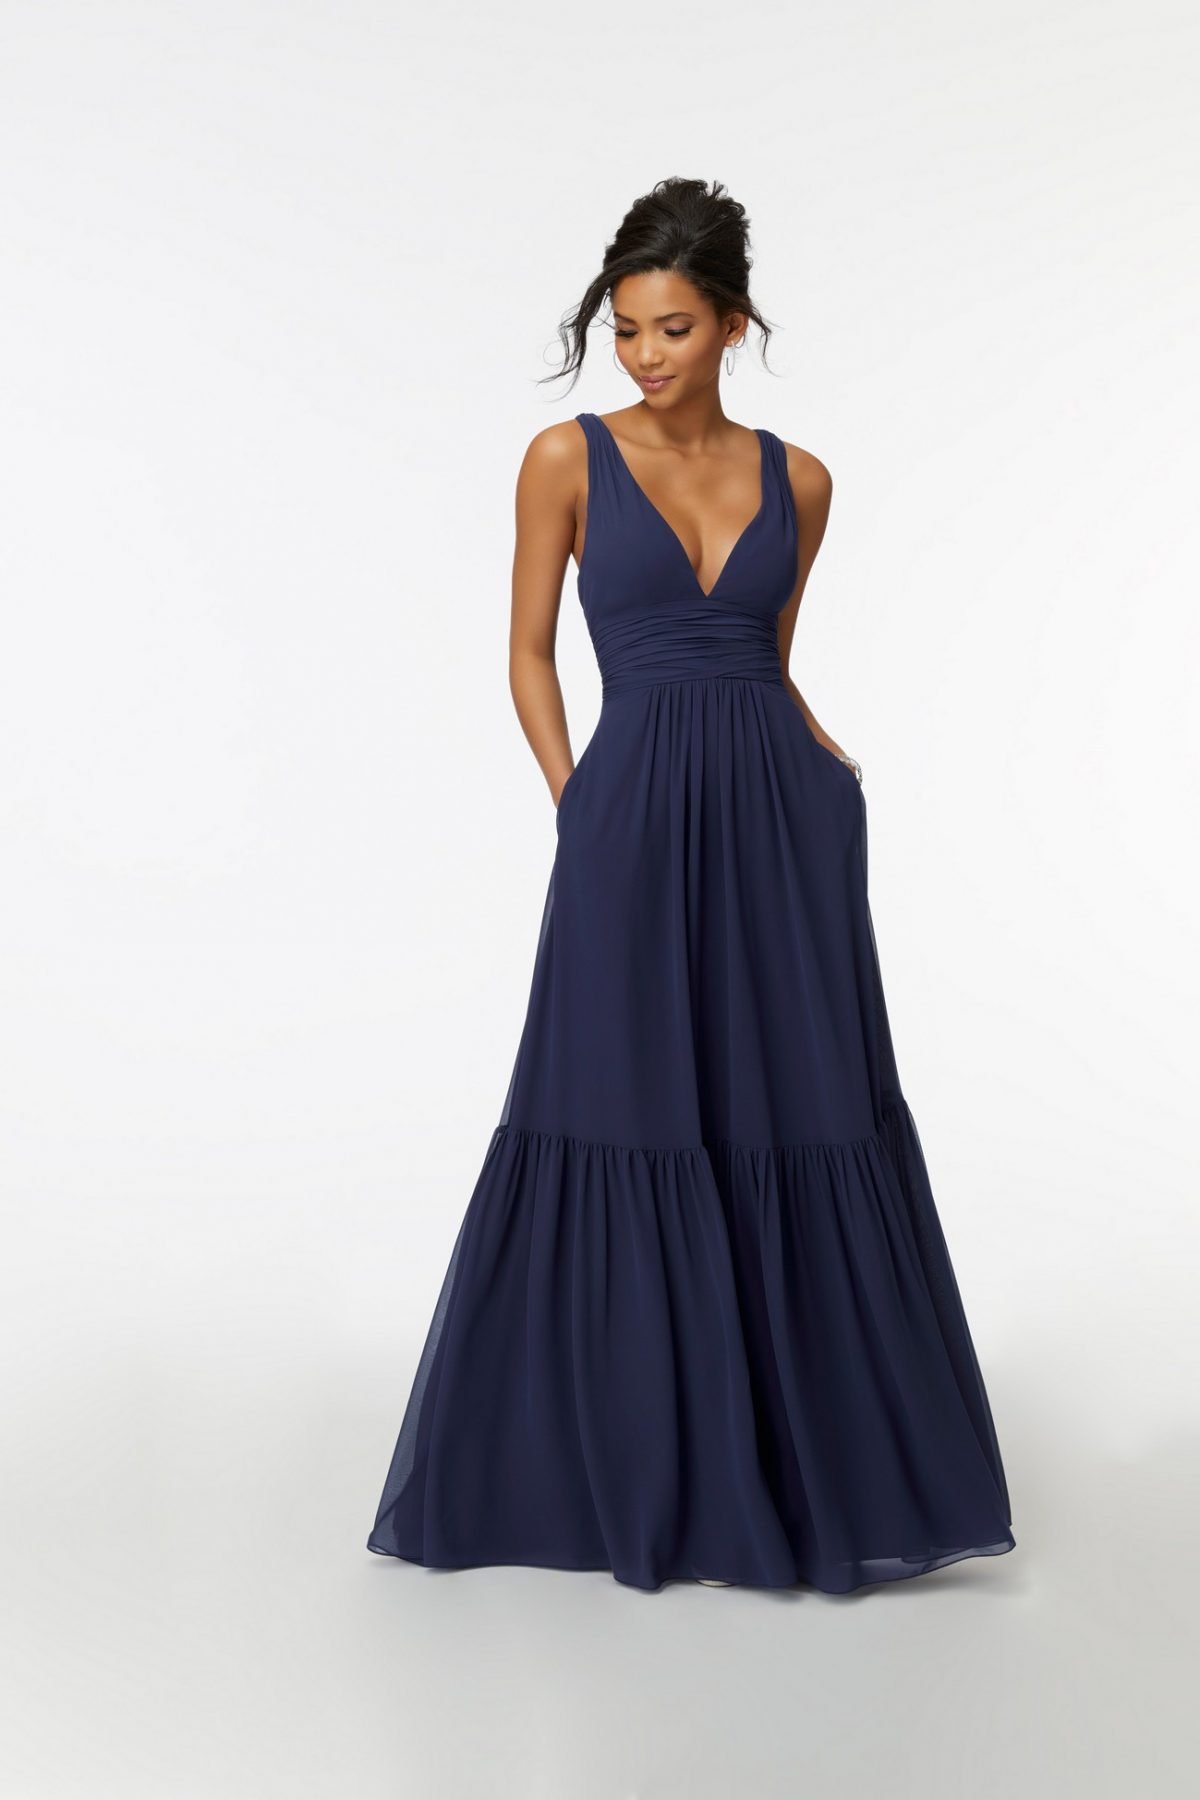 15 Beautiful Blue Bridesmaid Dresses For A Cool Wedding | Wedding Journal